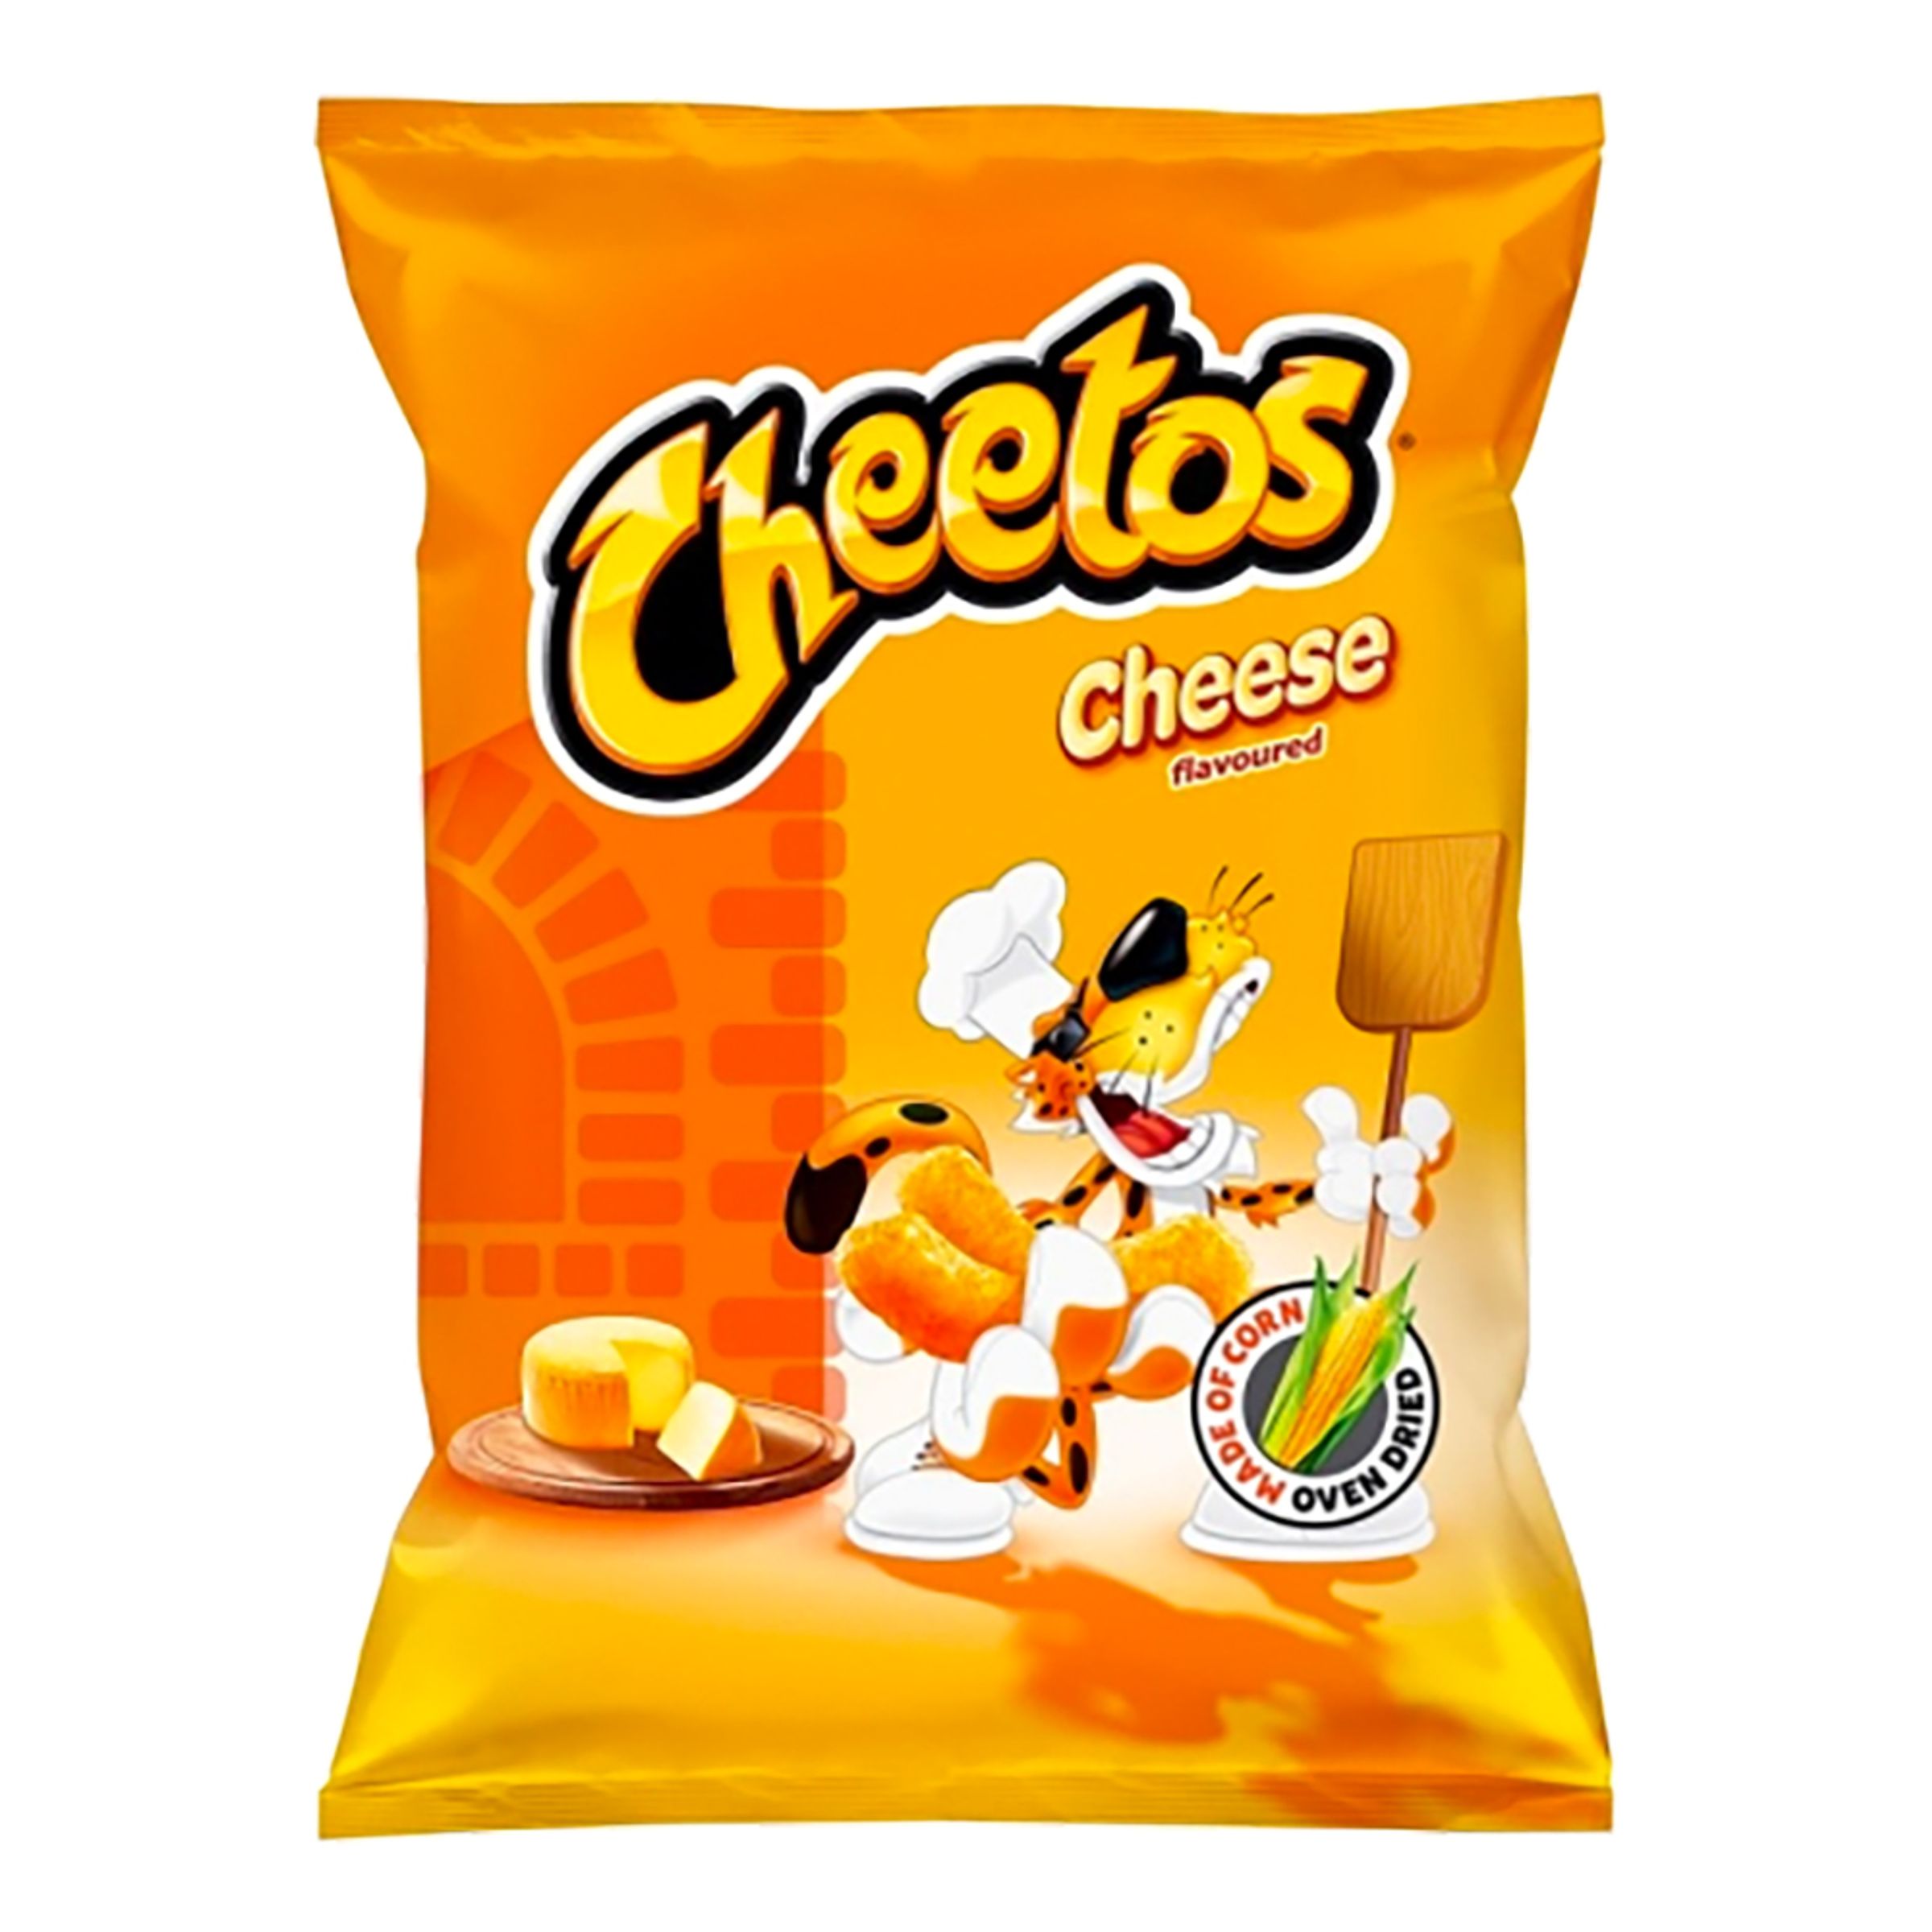 Cheetos Cheese - 130 g